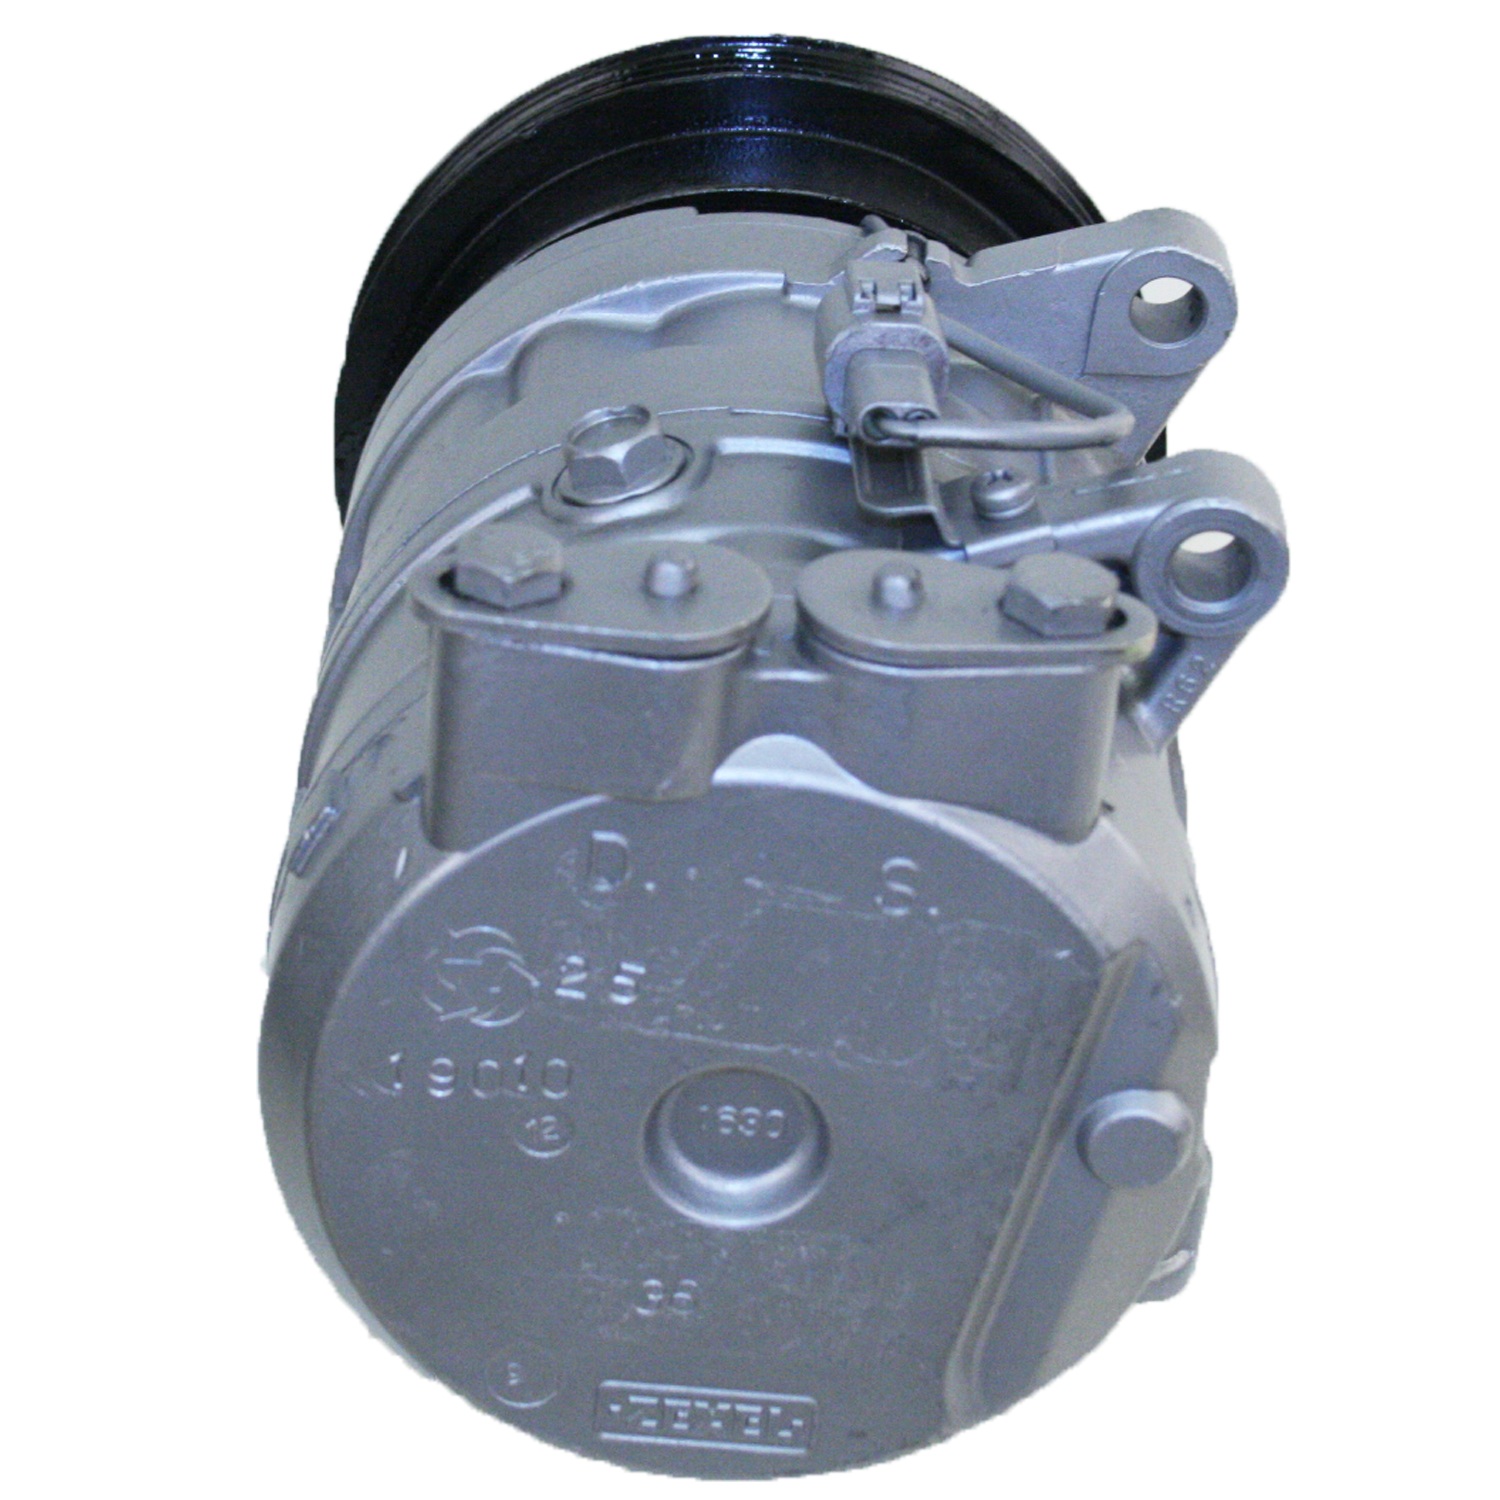 TCW Compressor 12450.401 Remanufactured Product Image field_60b6a13a6e67c